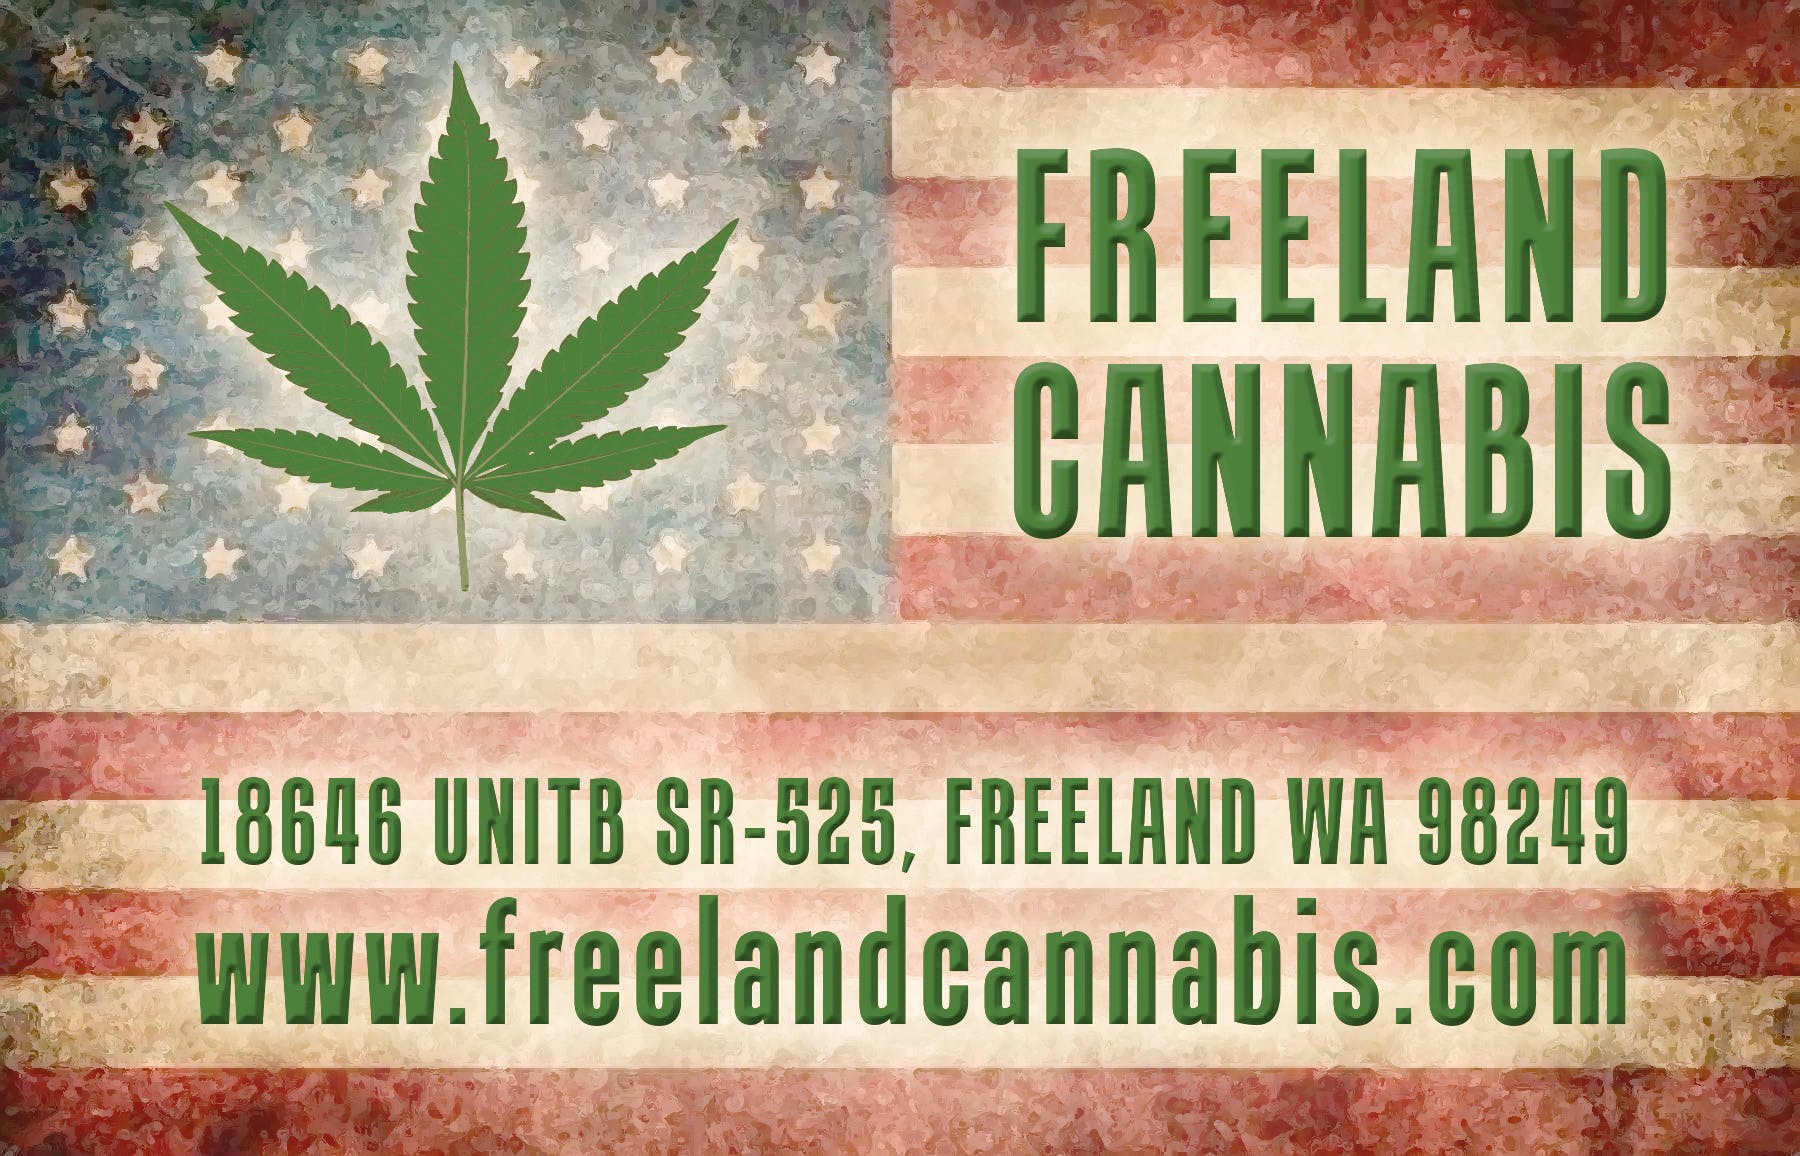 Freeland Cannabis & Whidbey Island Natural Medicine - Medical Marijuana Doctors - Cannabizme.com